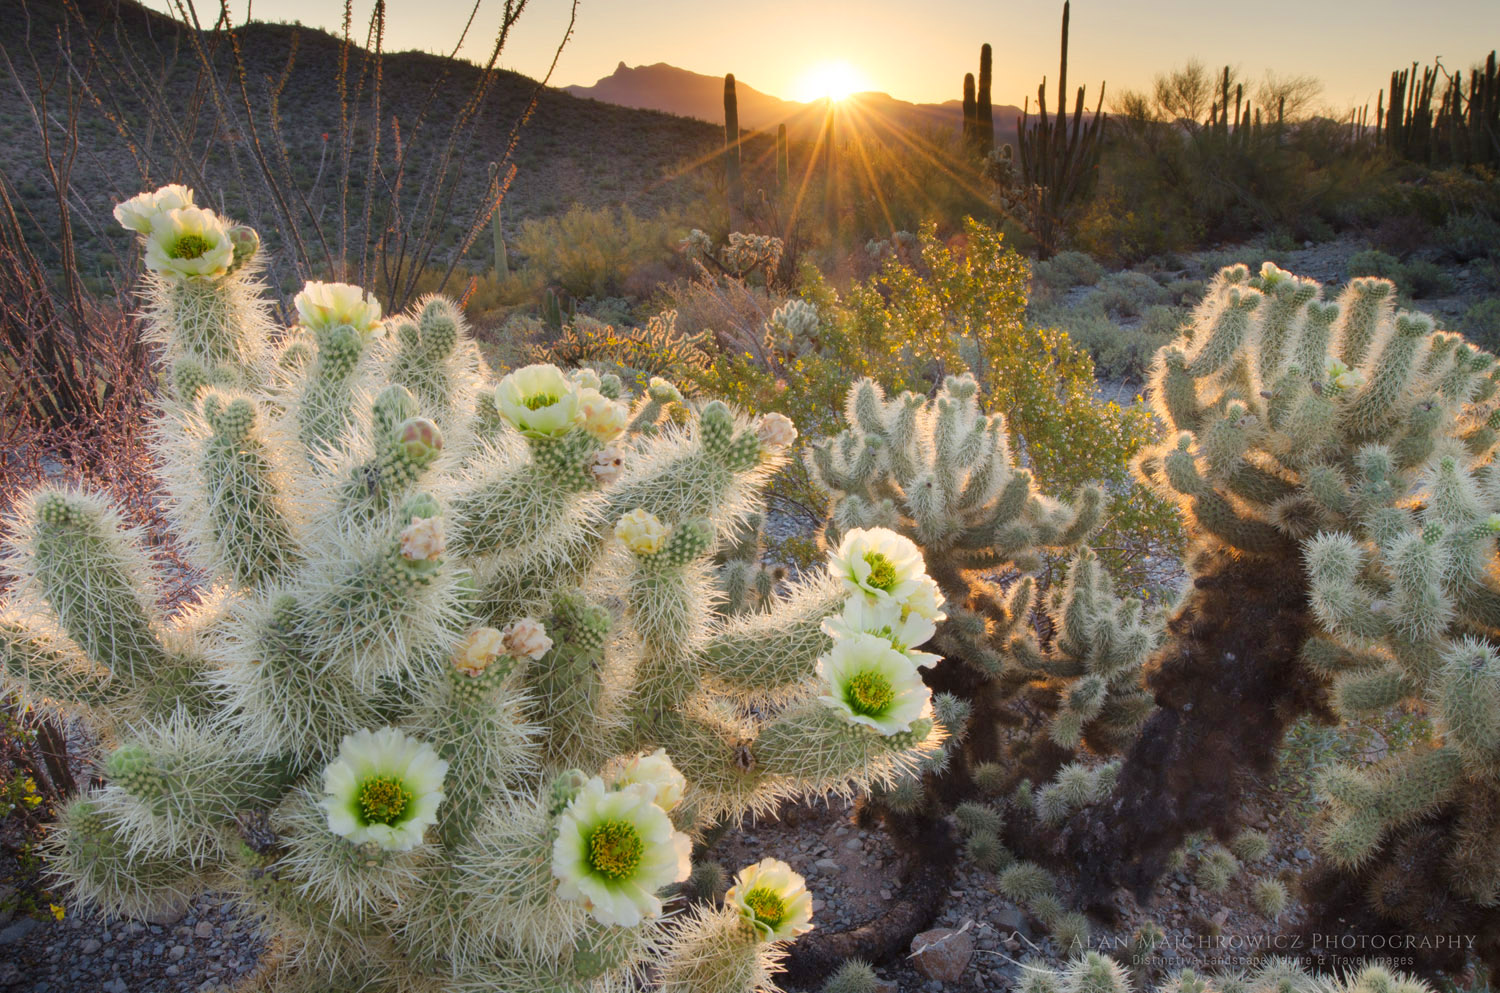 Teddy Bear Cholla cactus (Cylindropuntia bigelovii) glowing in the rays of the setting sun, Organ Pipe Cactus National Monument Arizona #55396